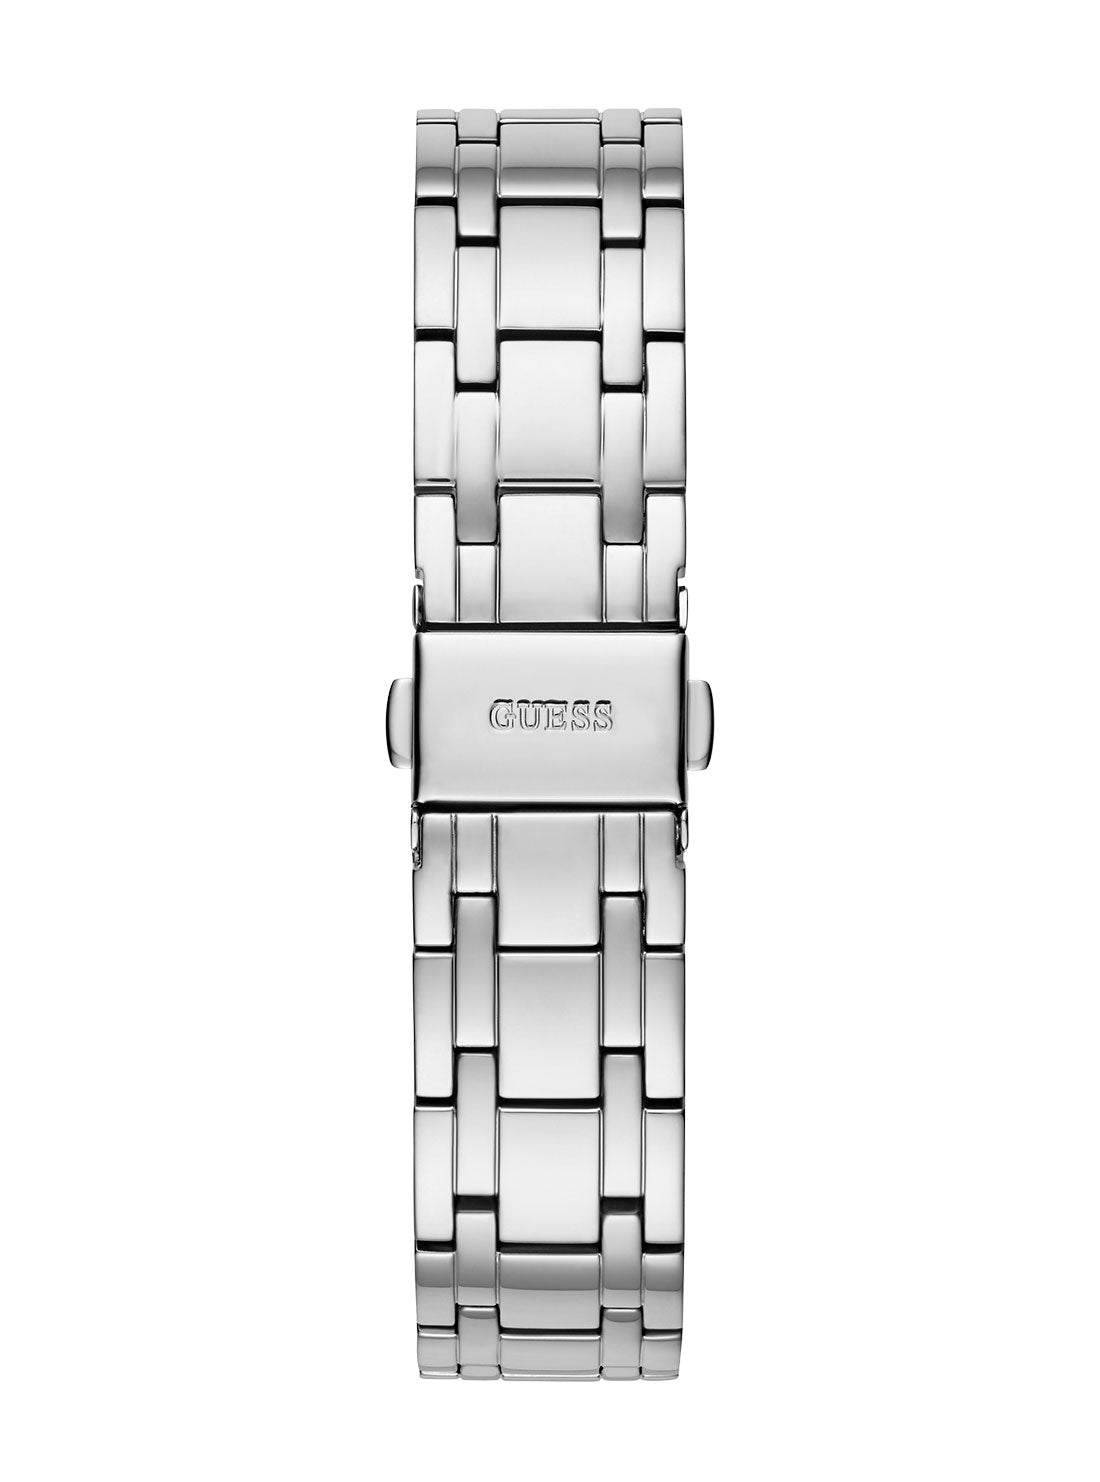 GUESS Women's Silver Cosmo Aqua Crystal Watch GW0033L7 Back View